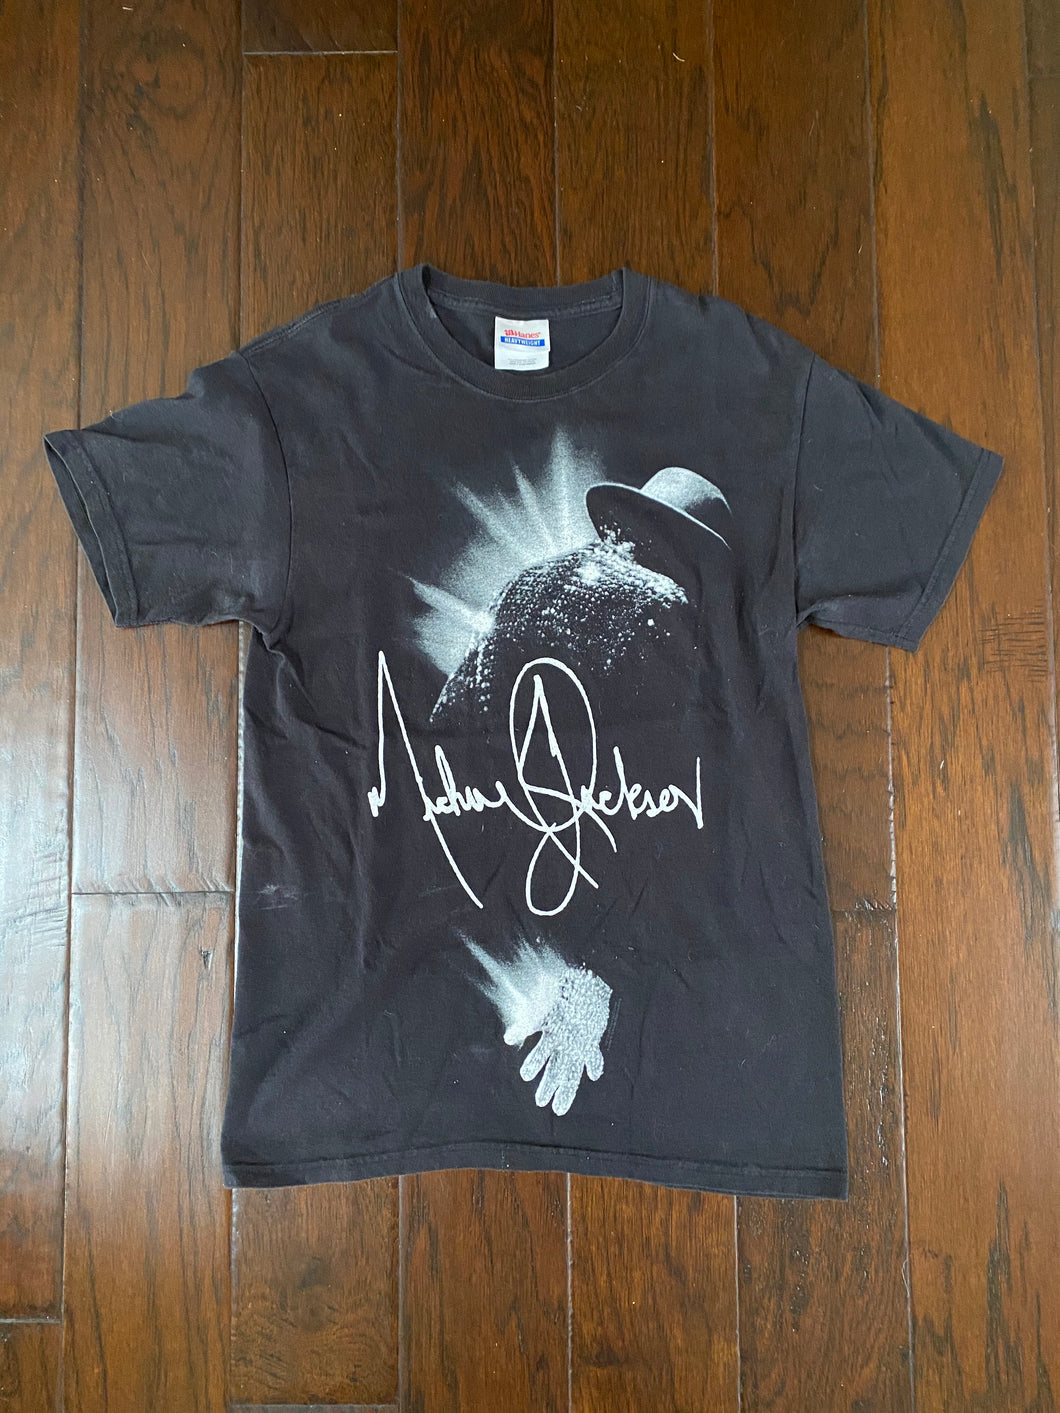 Michael Jackson 2009 Vintage Distressed T-shirt